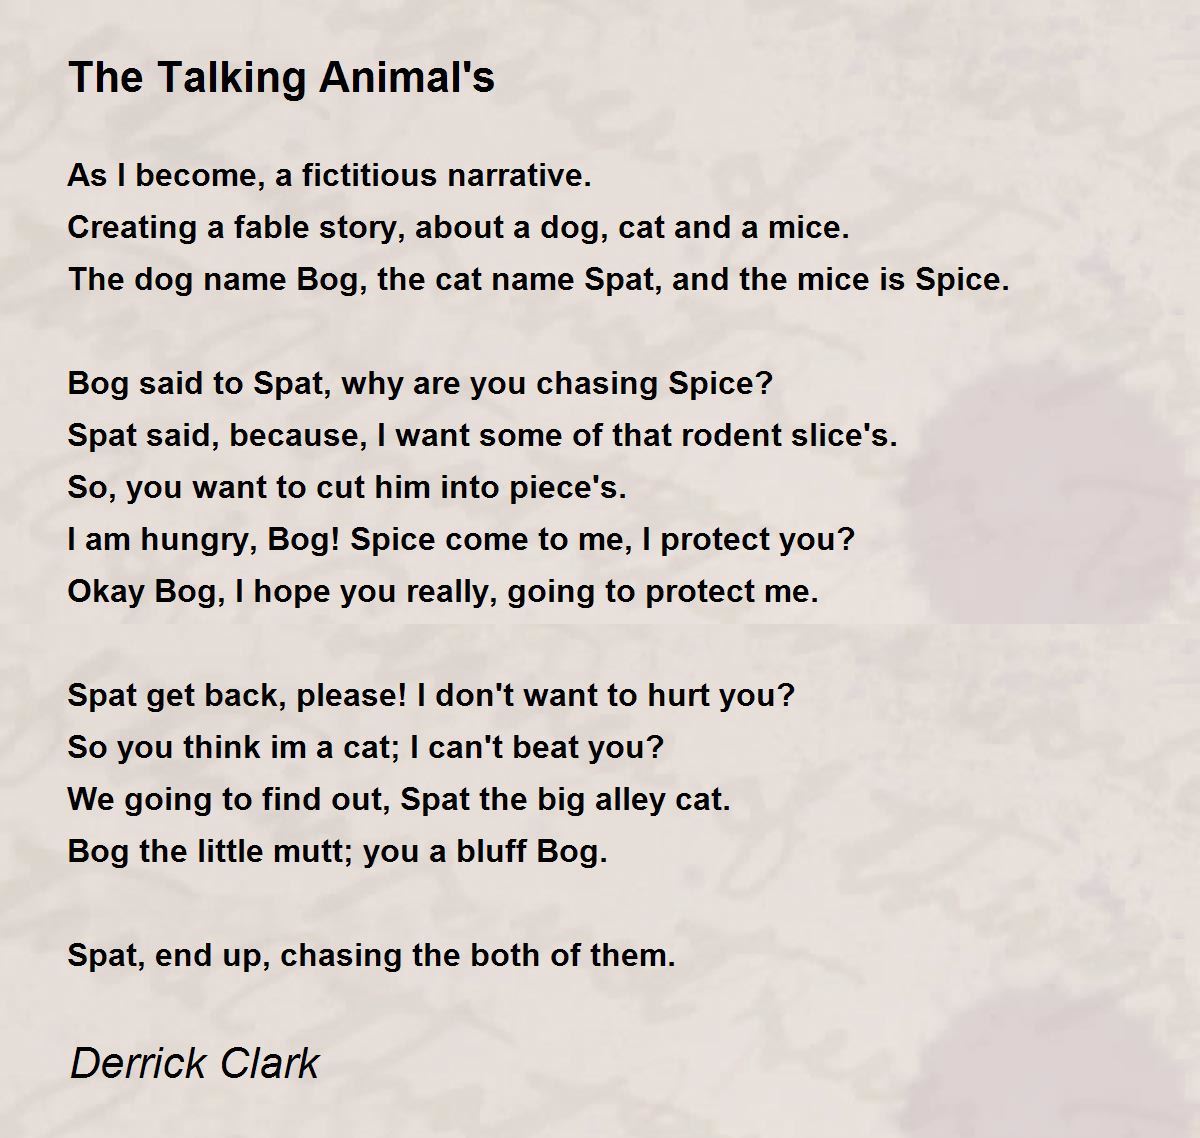 The Talking Animal's - The Talking Animal's Poem by Derrick Clark